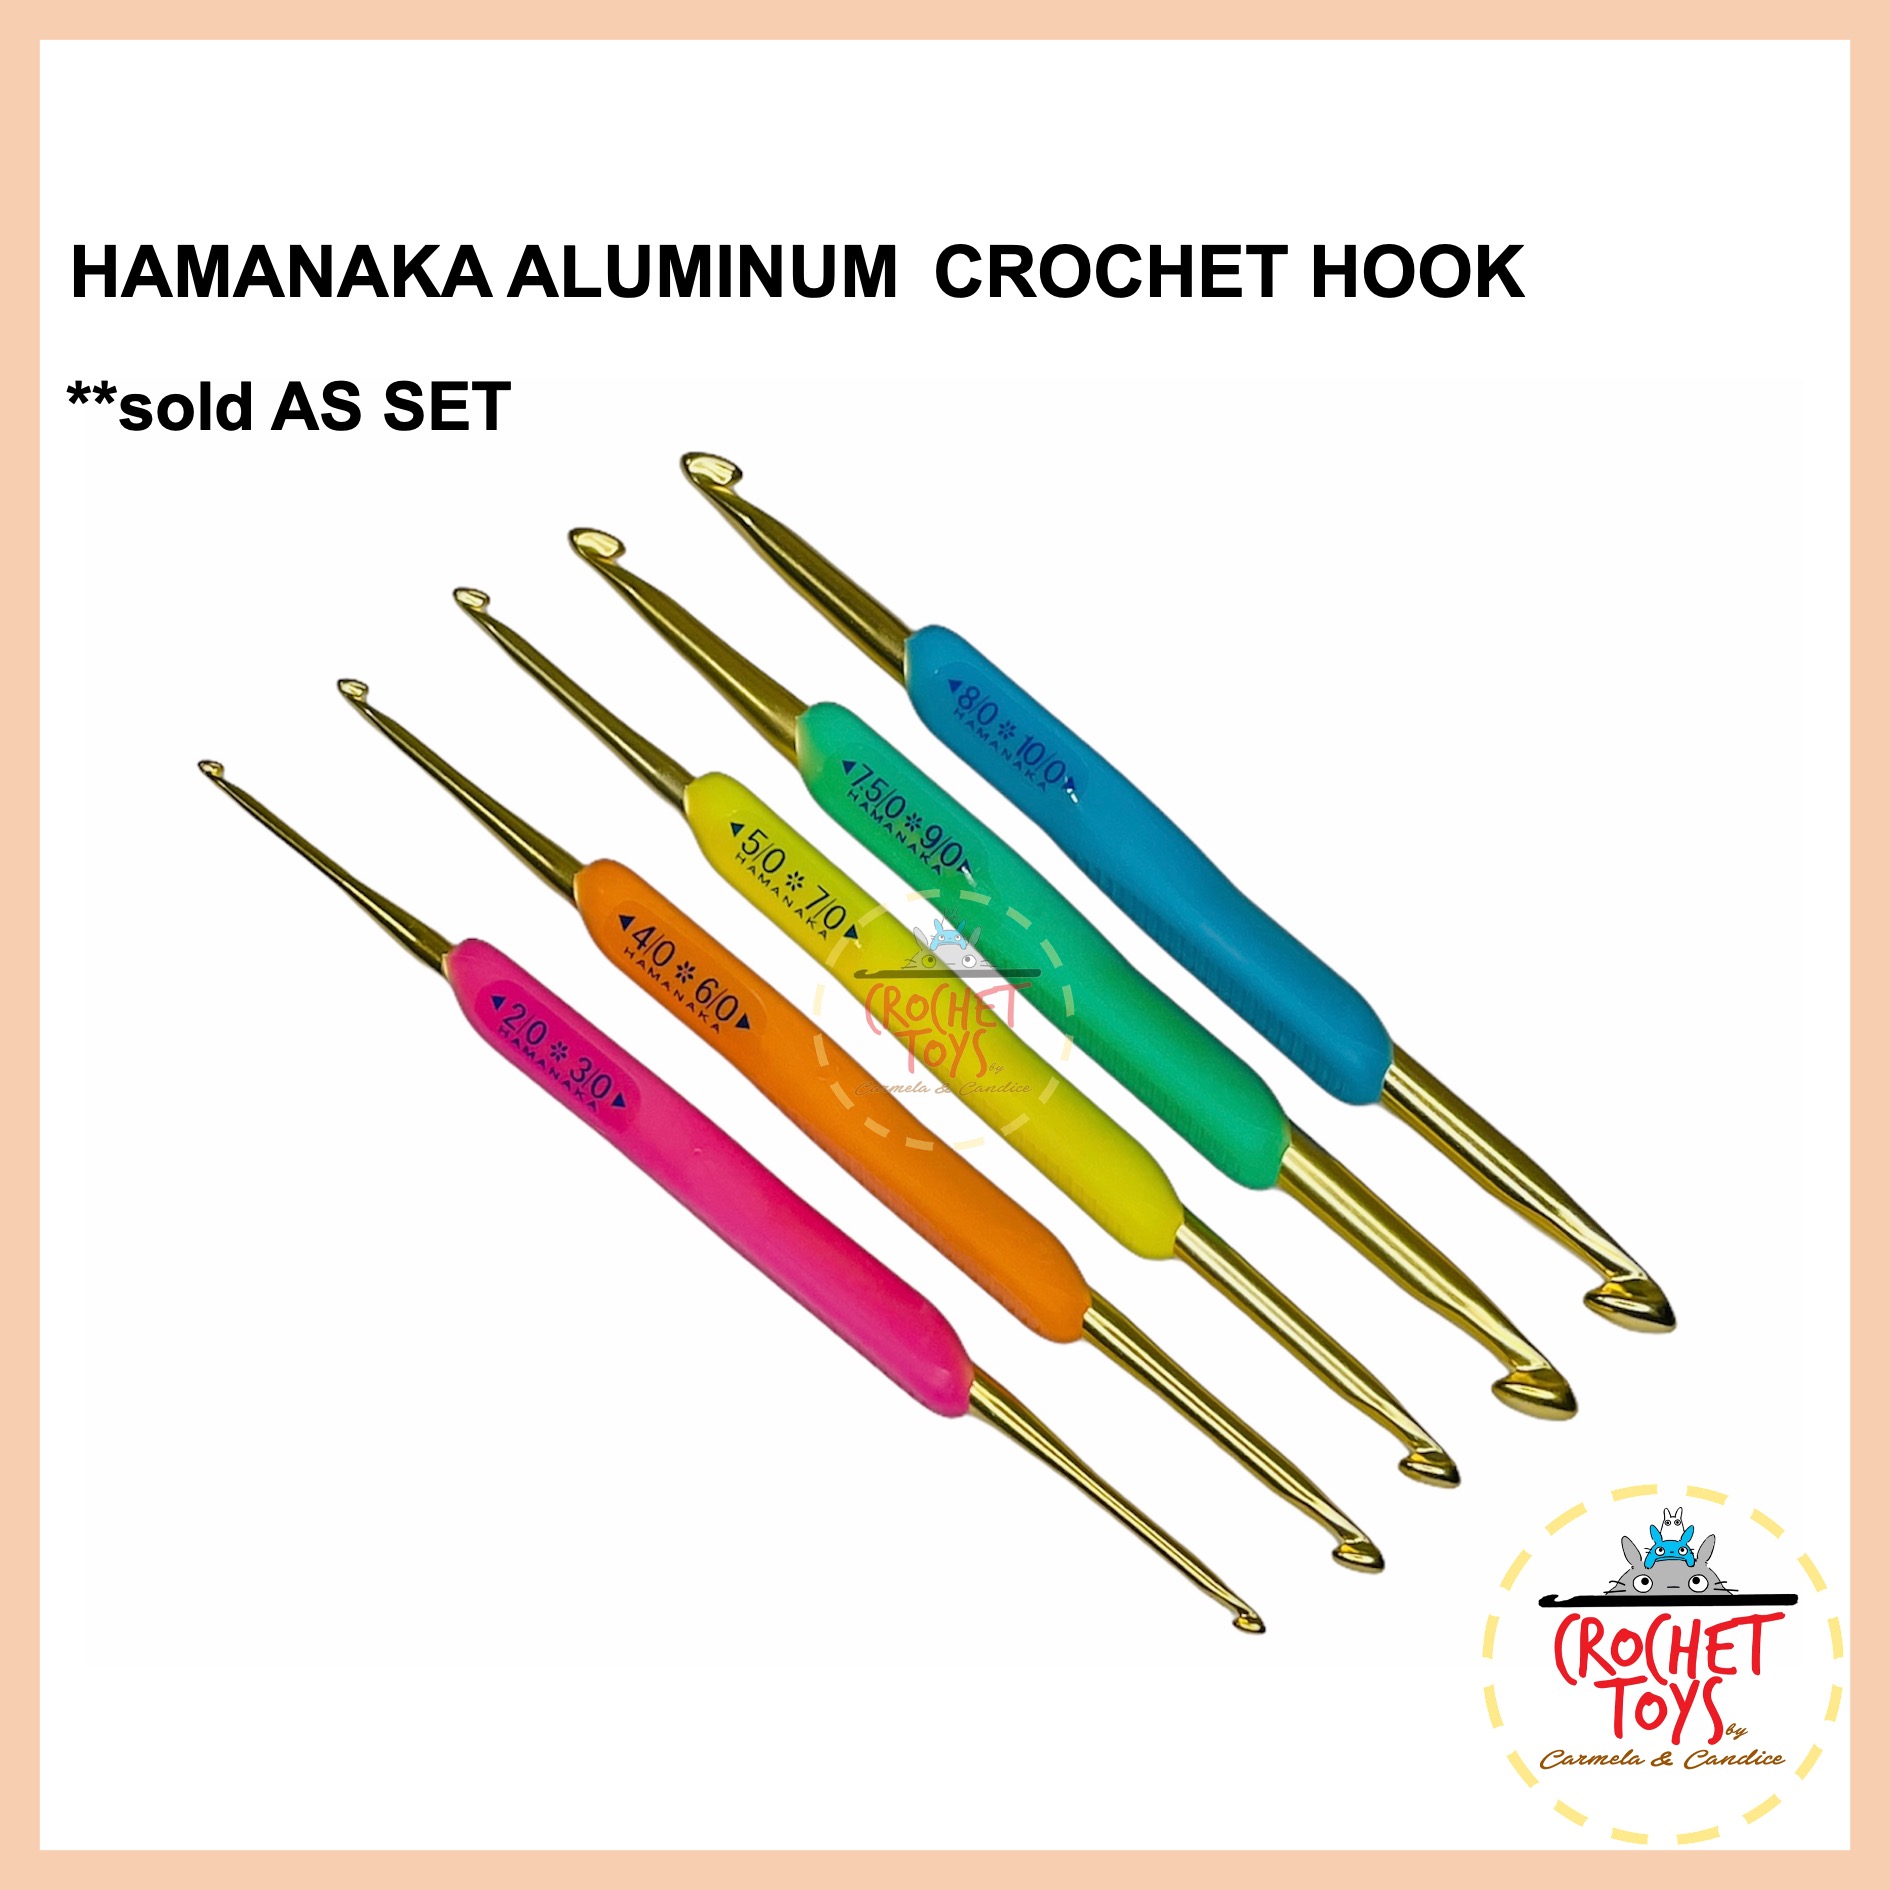 Hamanaka Aluminum Crochet Hook Set (Double ended)